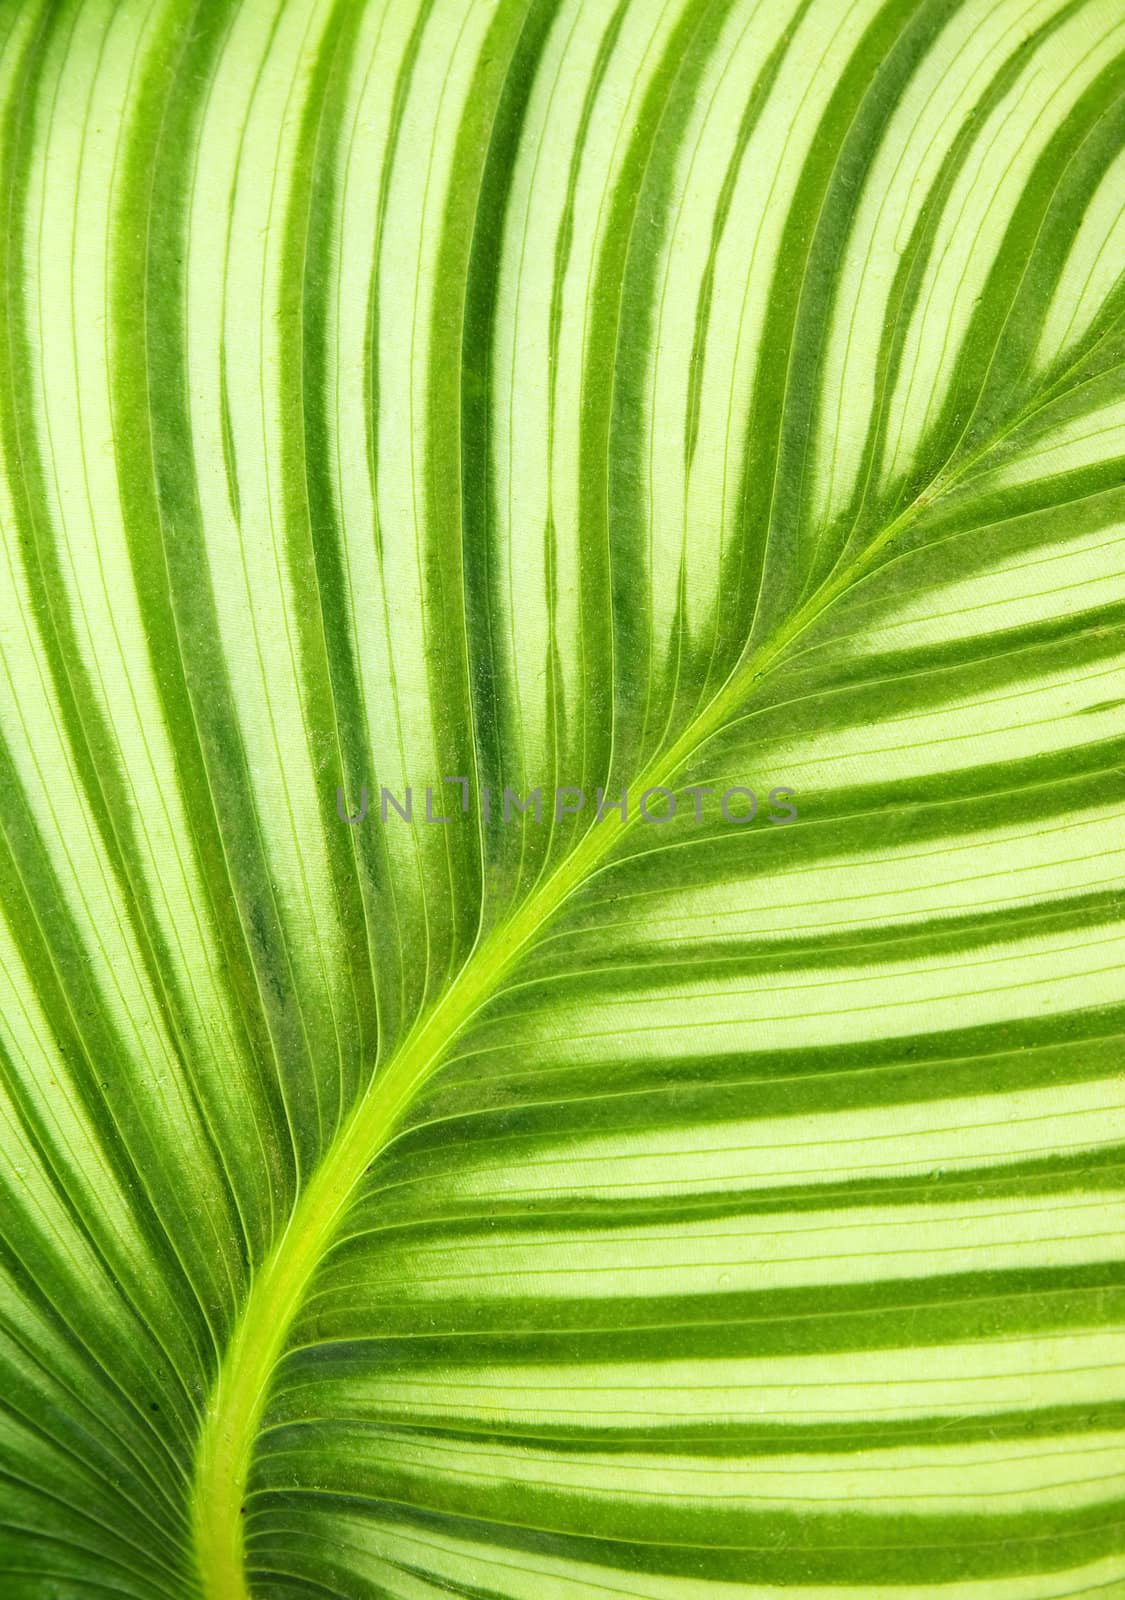 A close up of a beautiful green leaf